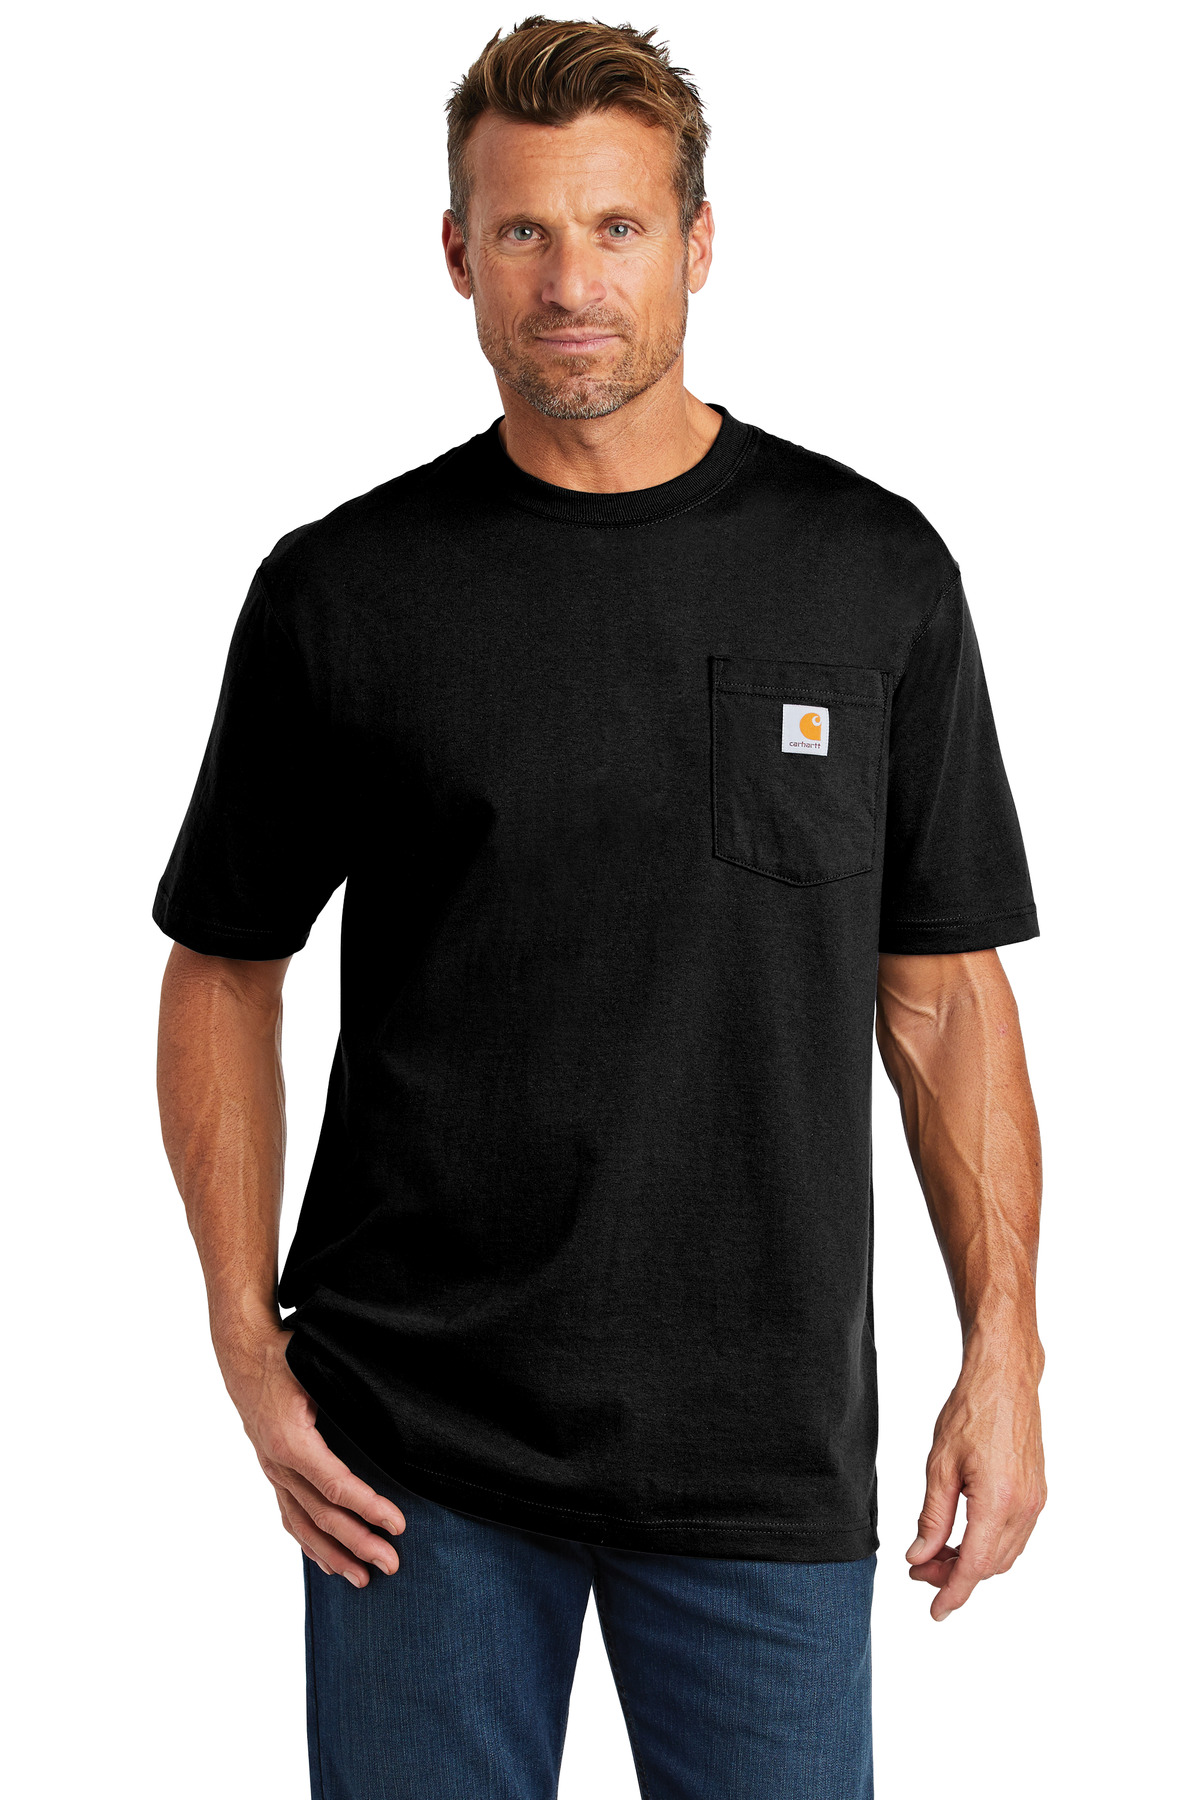 Carhartt Corporate Hospitality TShirts & Workwear ® Workwear Pocket Short Sleeve T-Shirt.-Carhartt